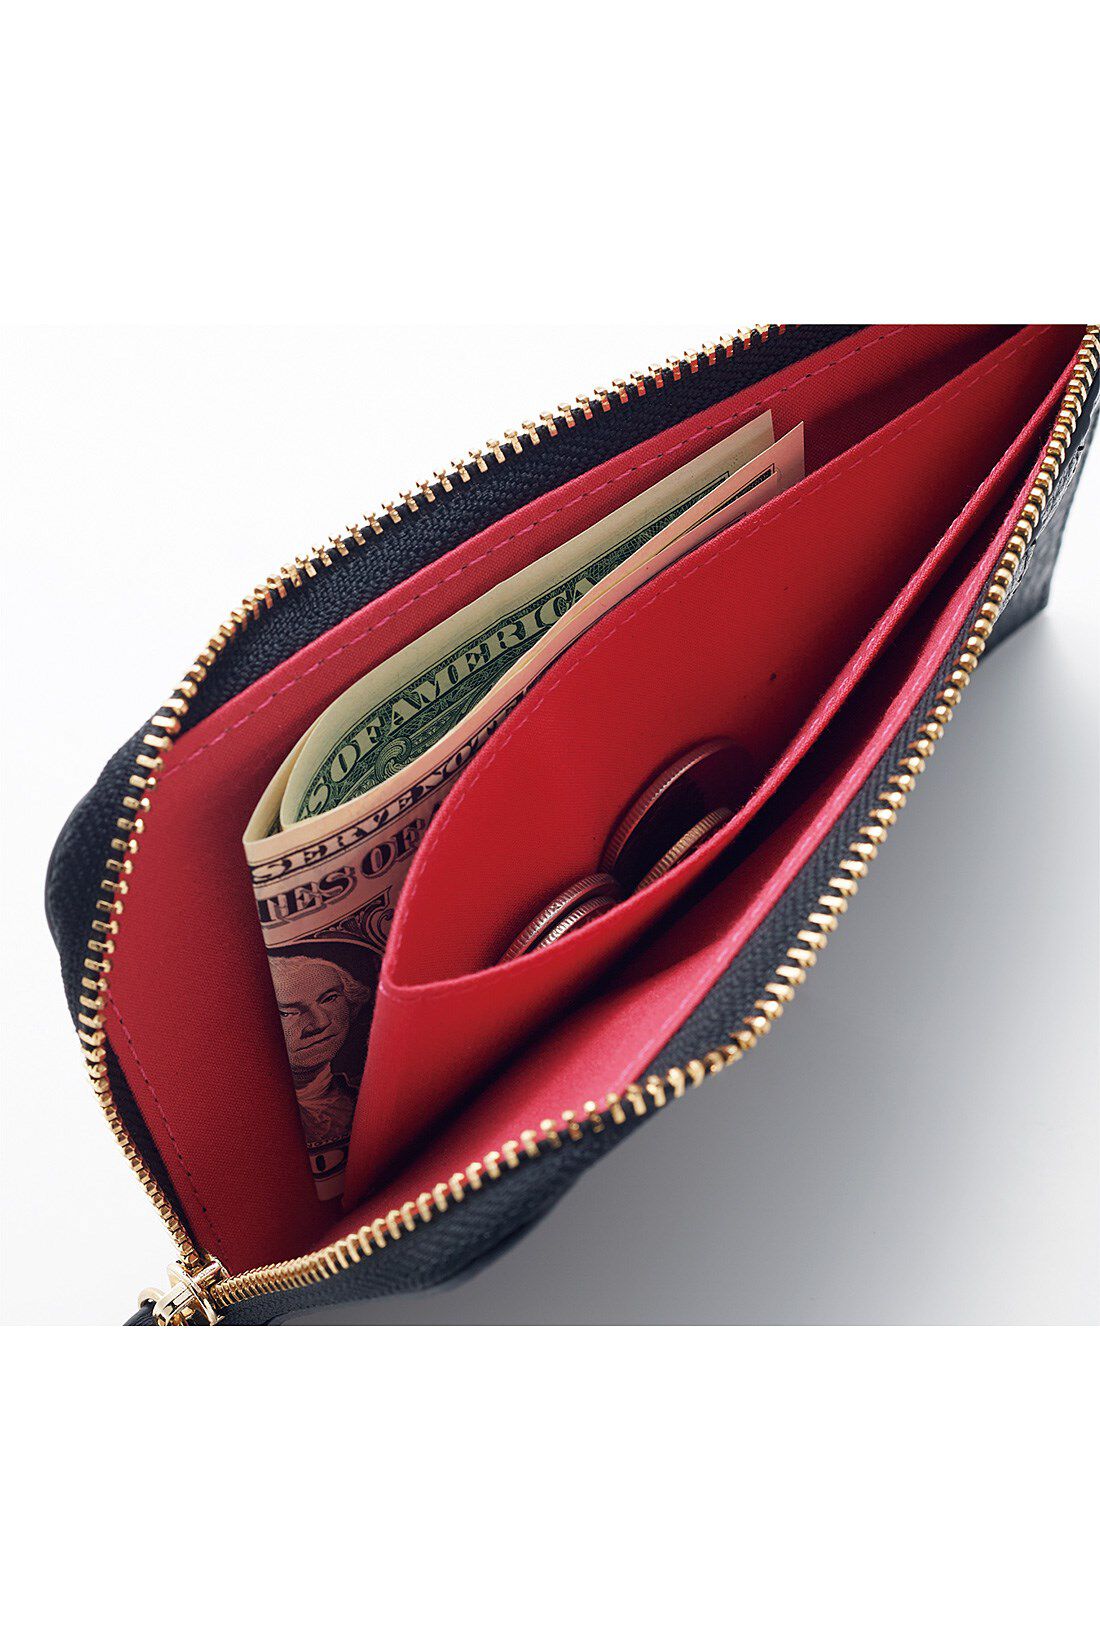 IEDIT[イディット]　本革が大人にうれしい スターエンボス加工のスリムミニ財布〈シルバー〉|中が見やすい明るめピンクで気分も上がります。